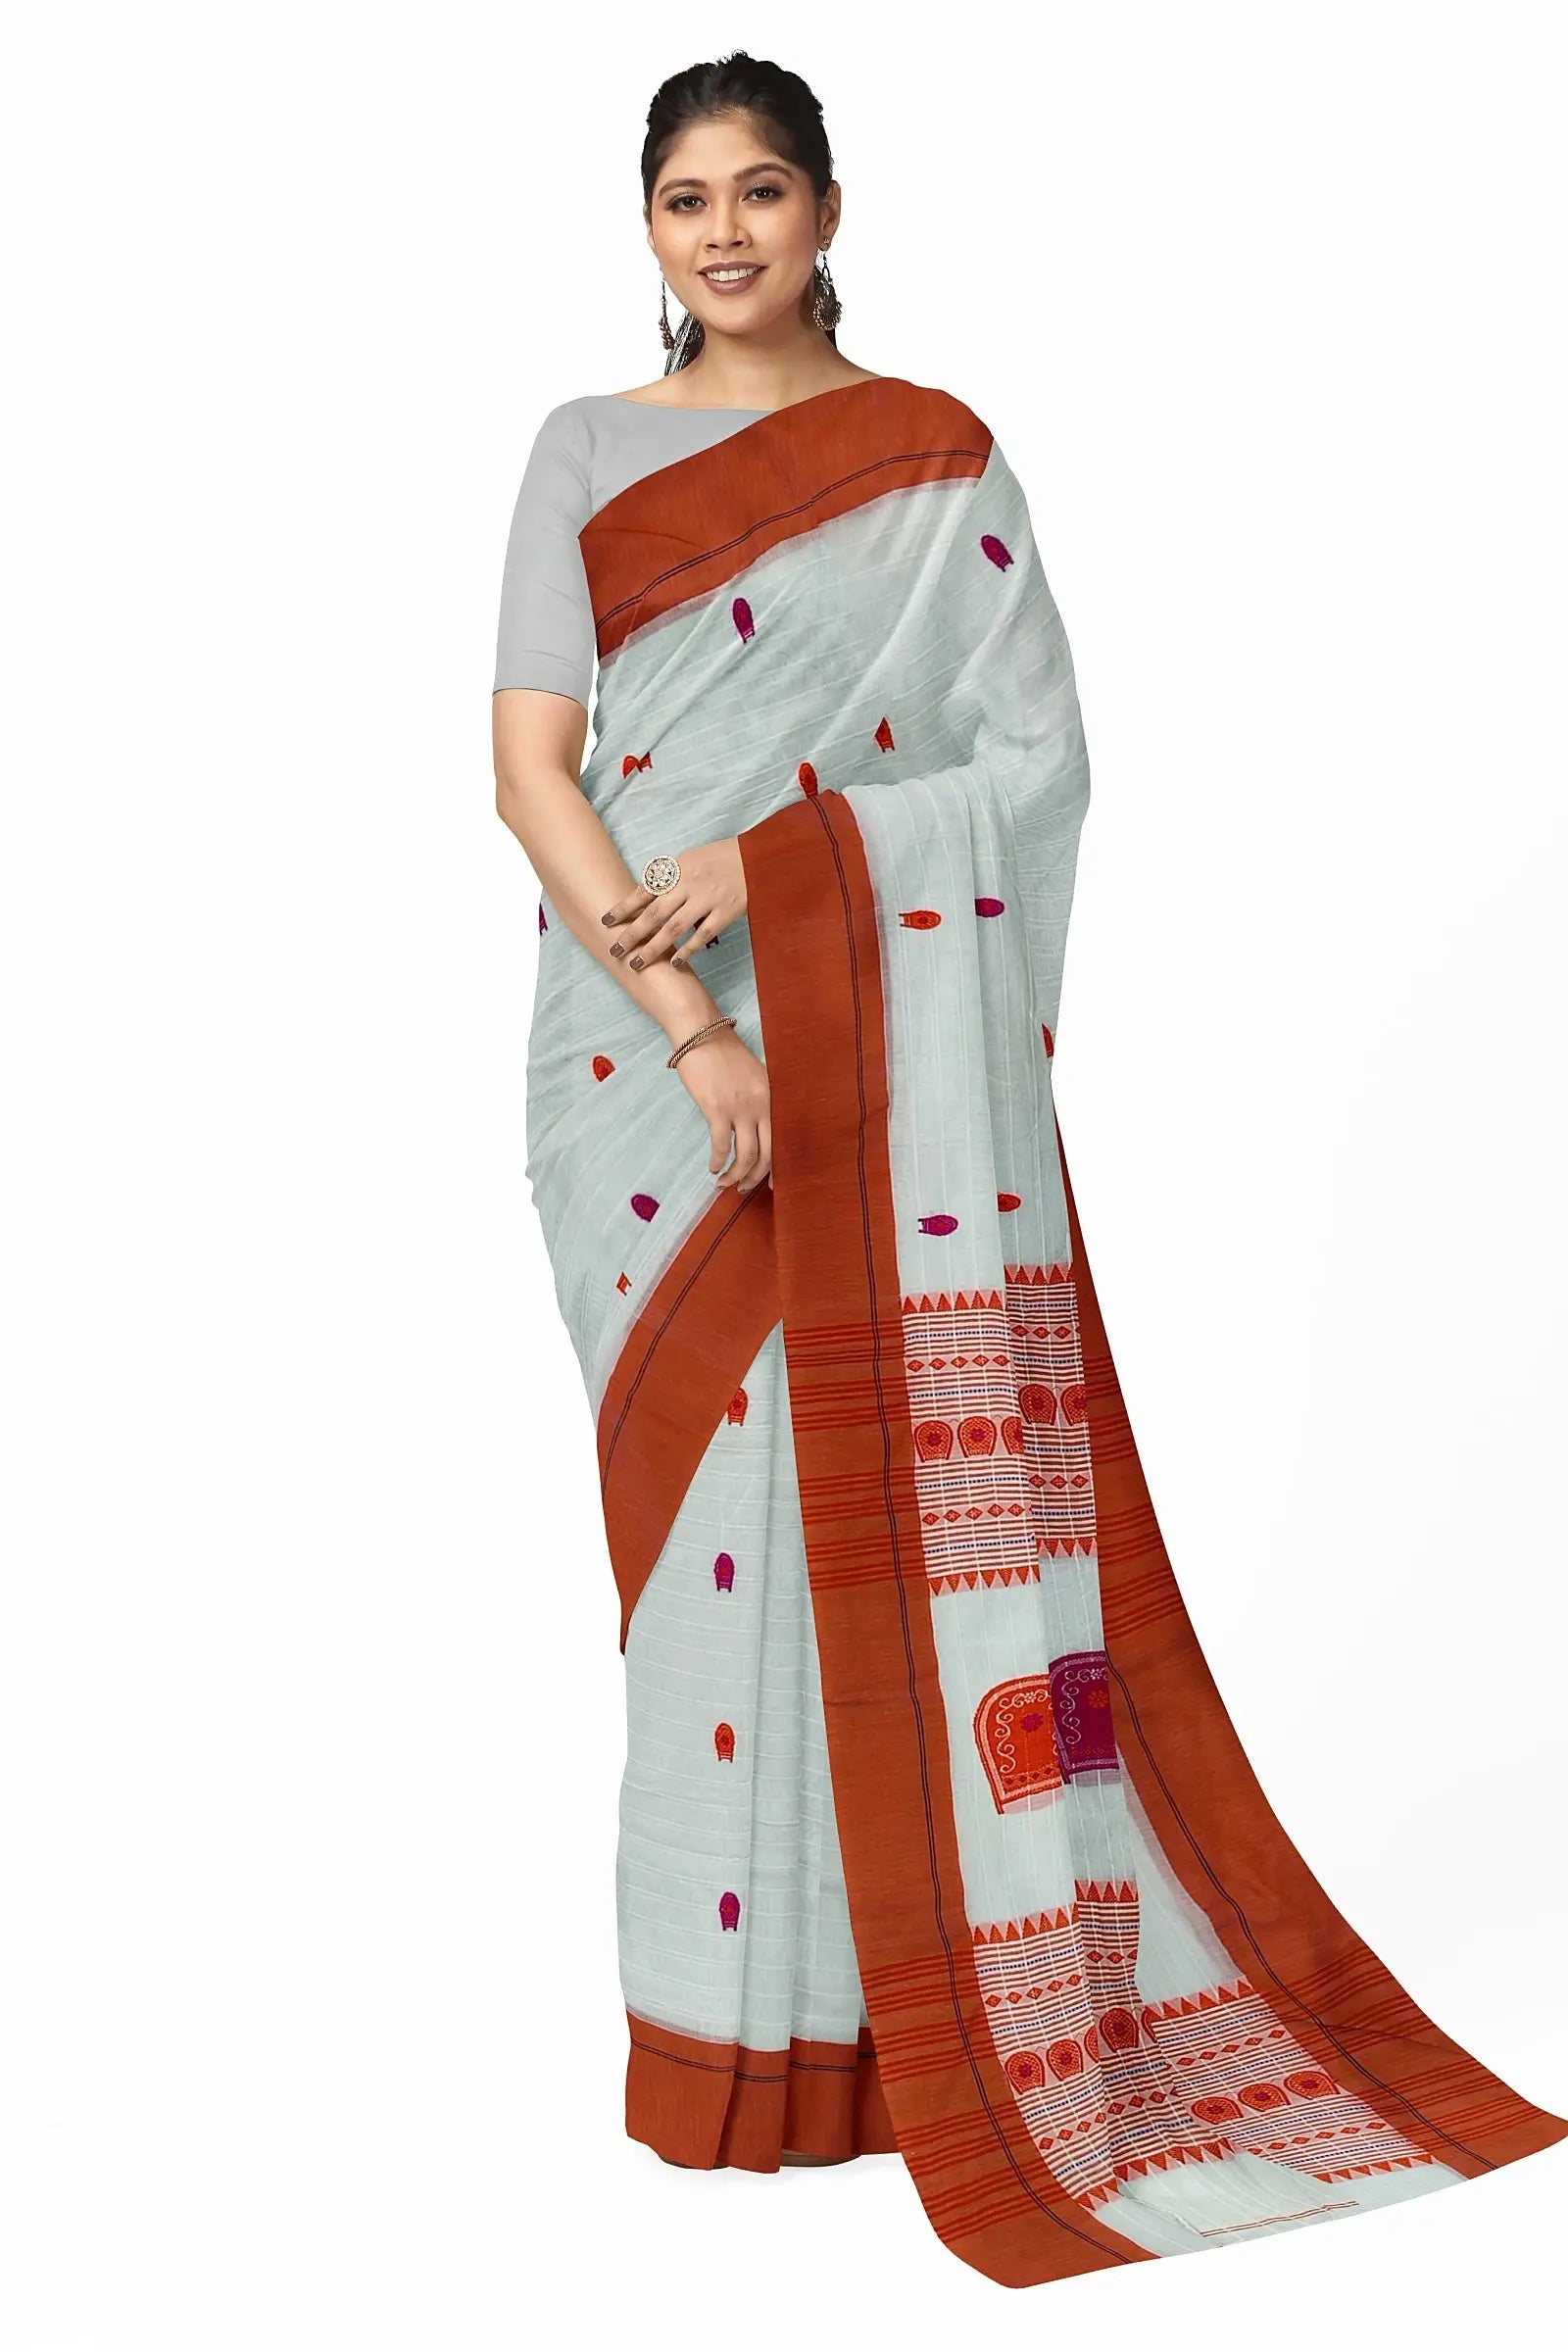 khadi cotton saree best quality Putul's fashion